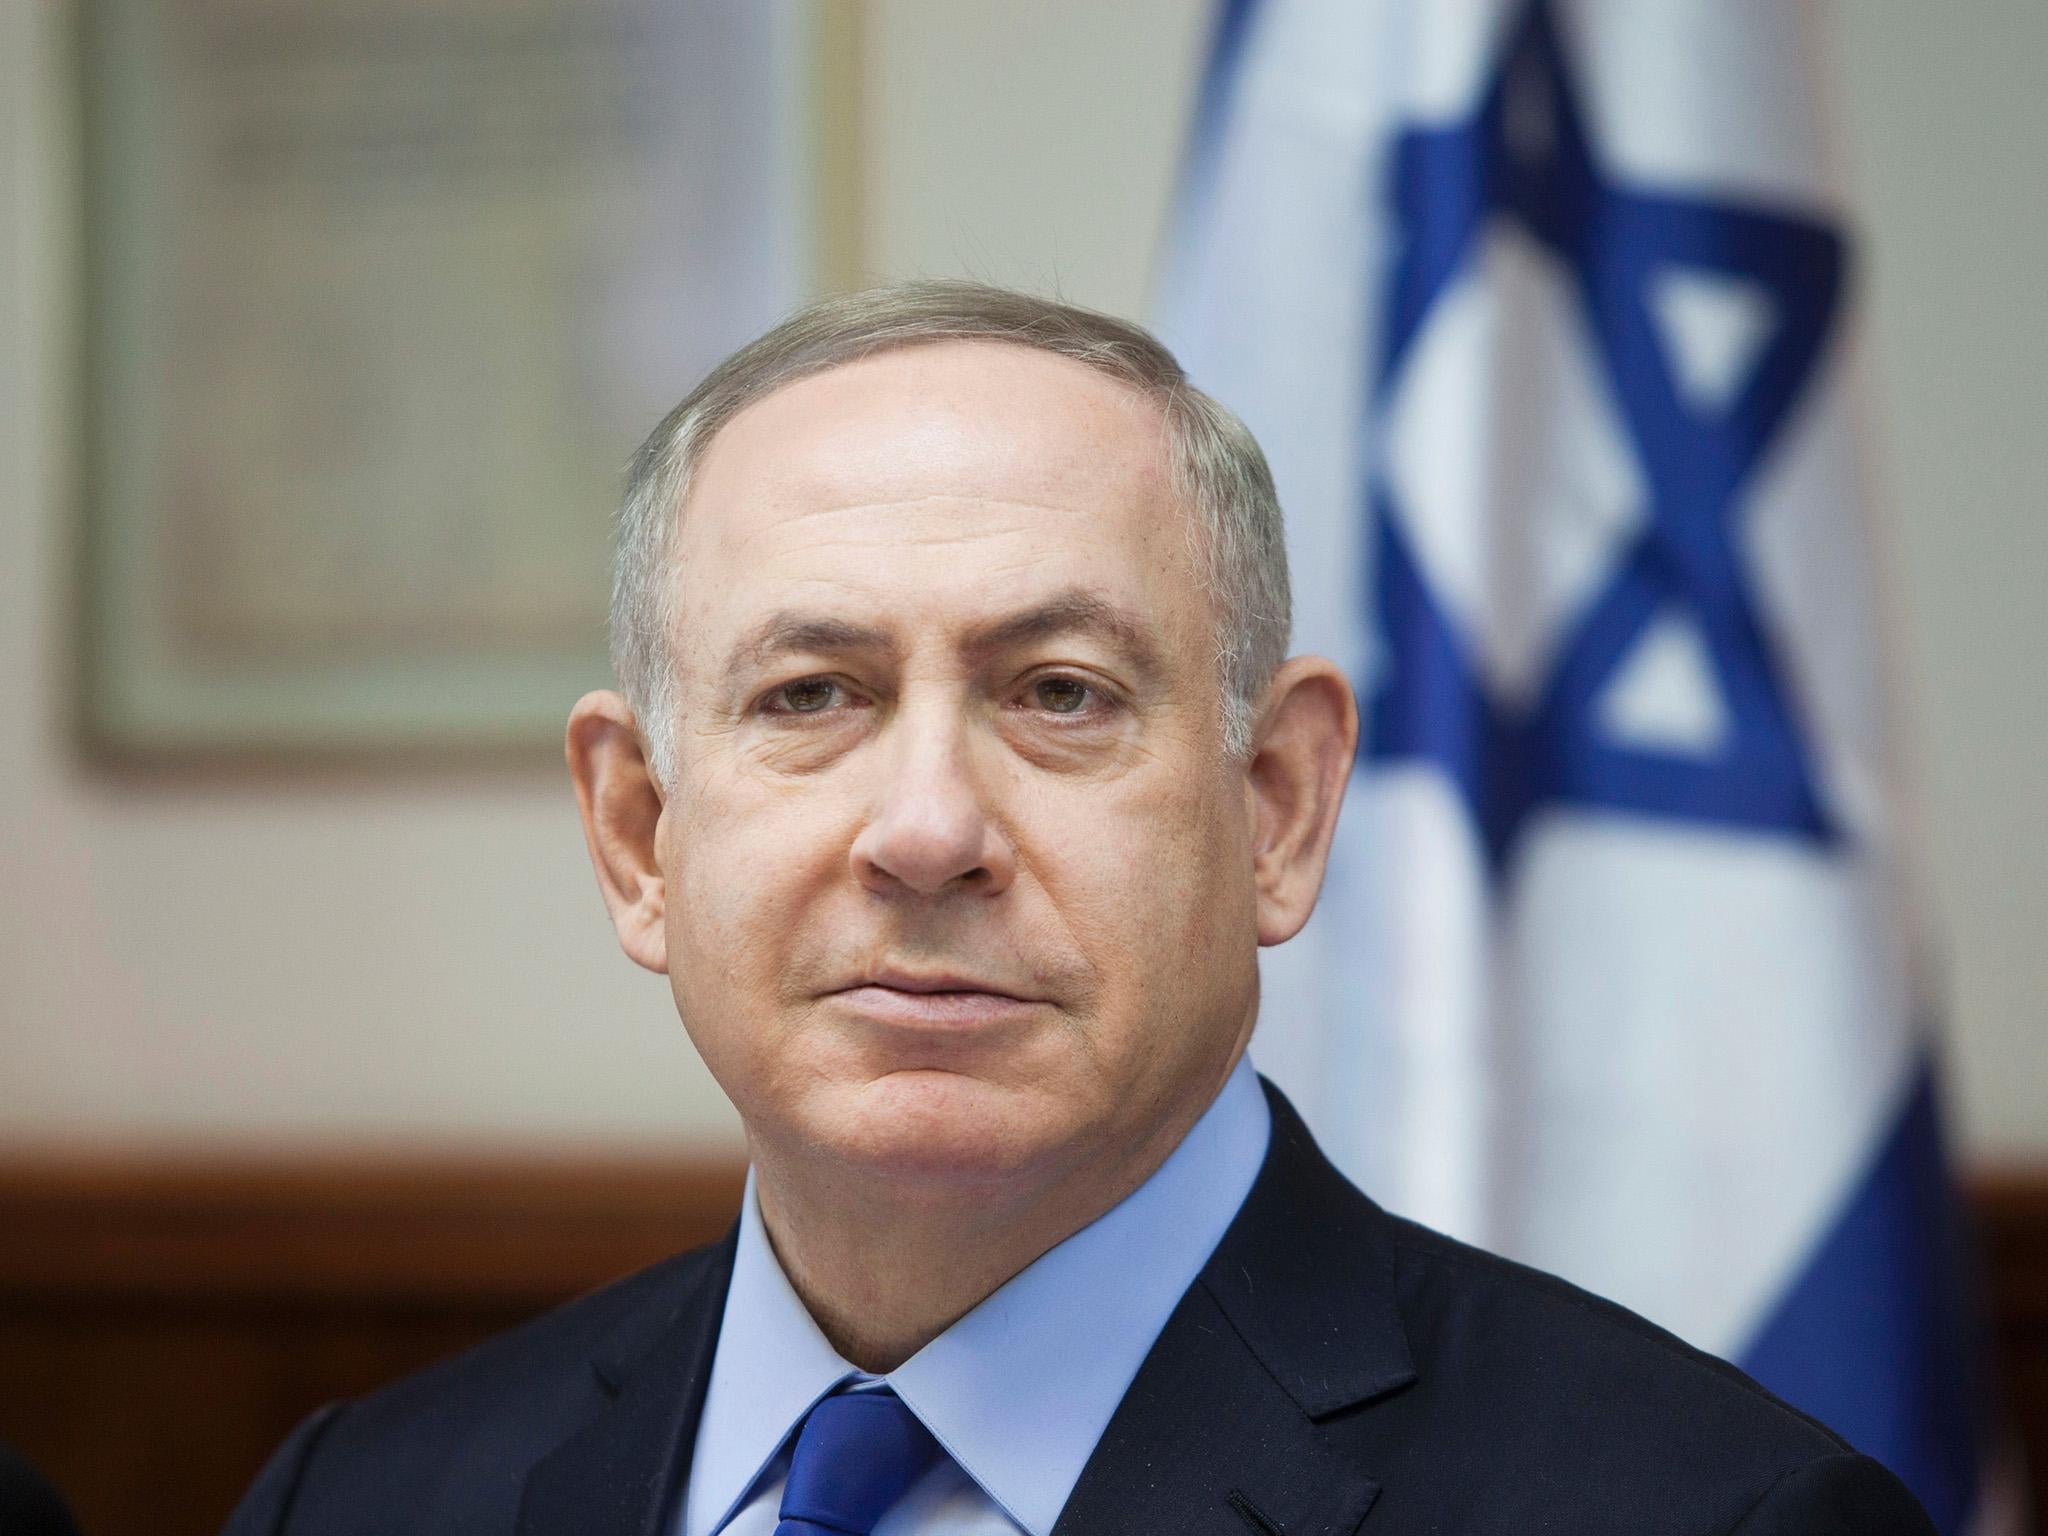 Israeli Prime Minister Benjamin Netanyahu said this week that those who opposed Israeli settlements were declaring ‘war’